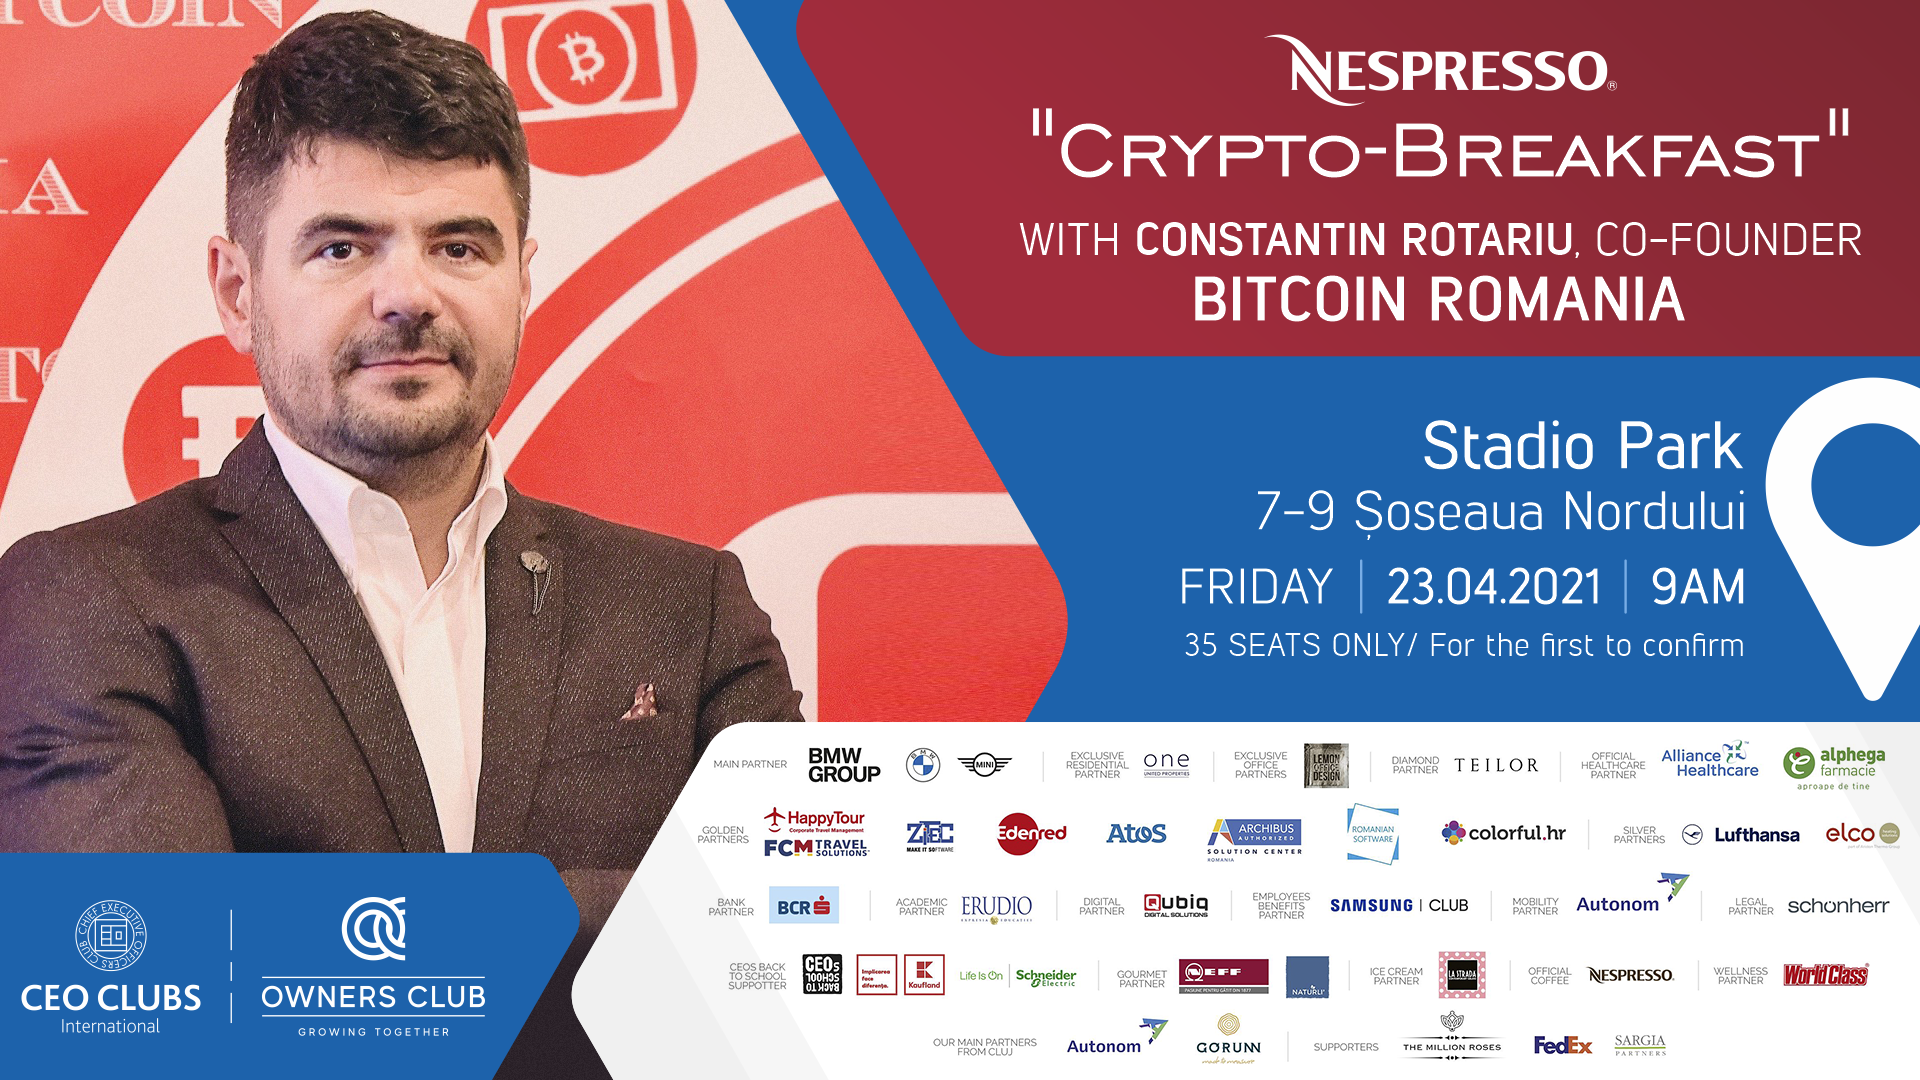 LIVE Crypto-Breakfast with Constantin Rotariu, co-founder BITCOIN Romania